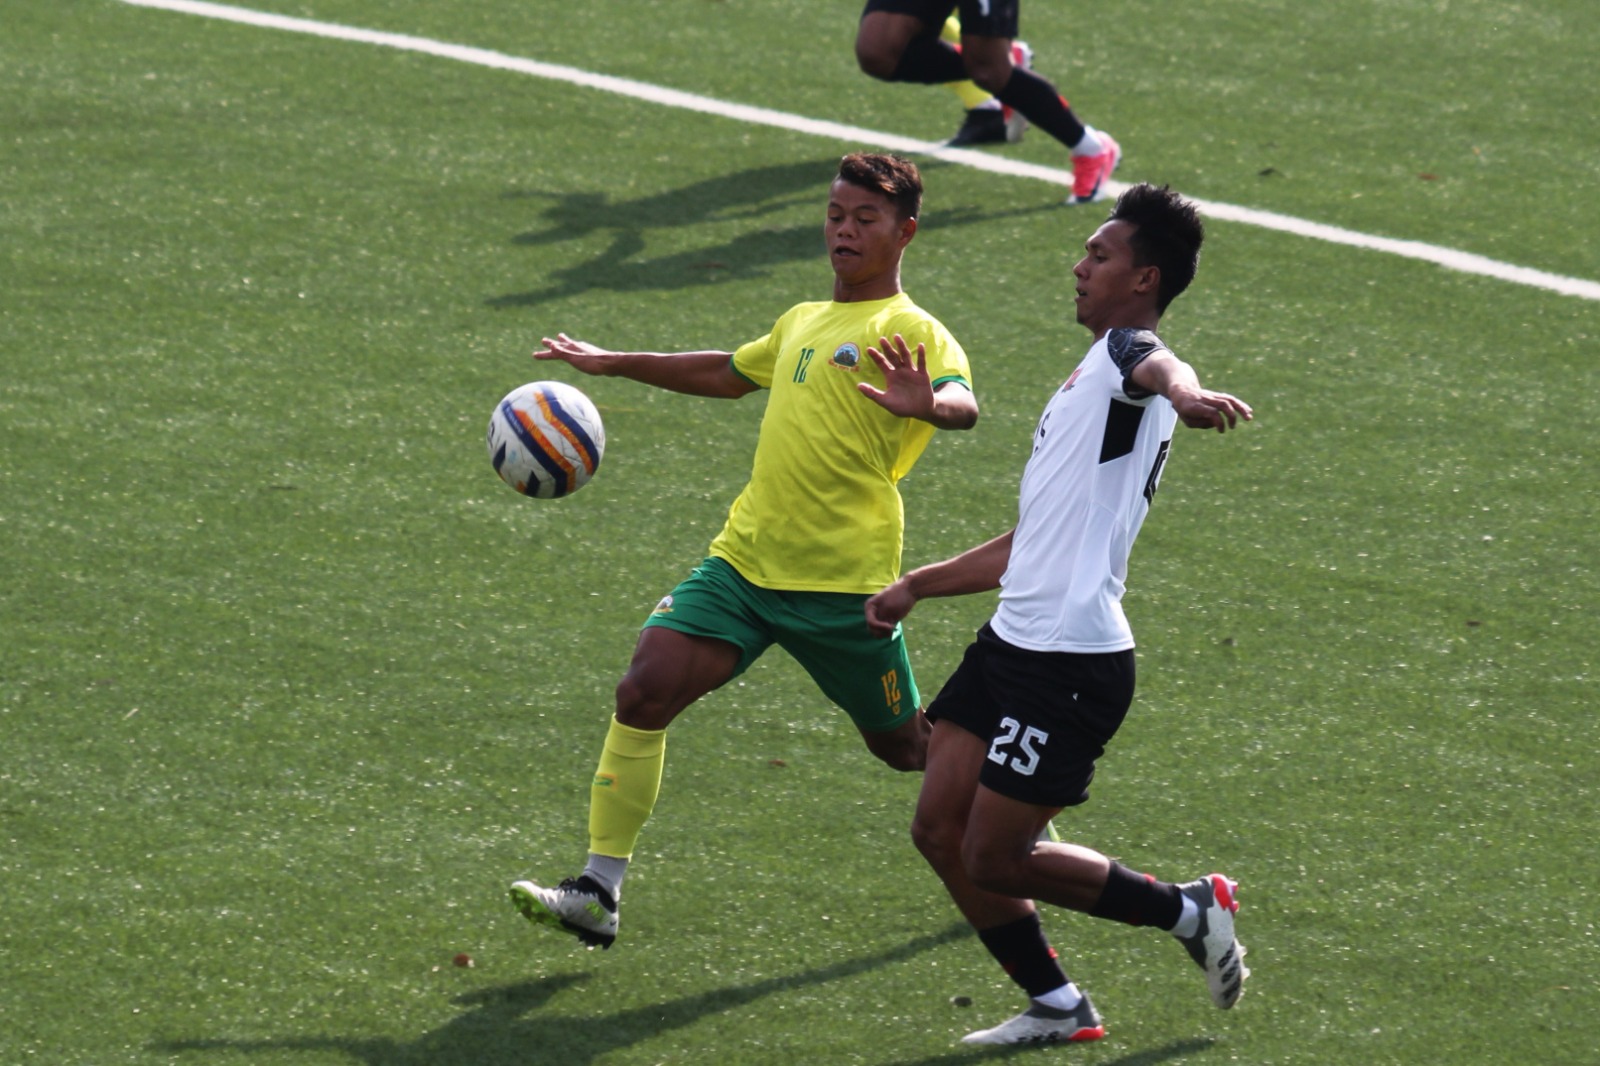 Shillong Premier League | Lyngba ka hat trick u Donlad pynliem ka Mawlai iaka Sawmer da 7-2 kol